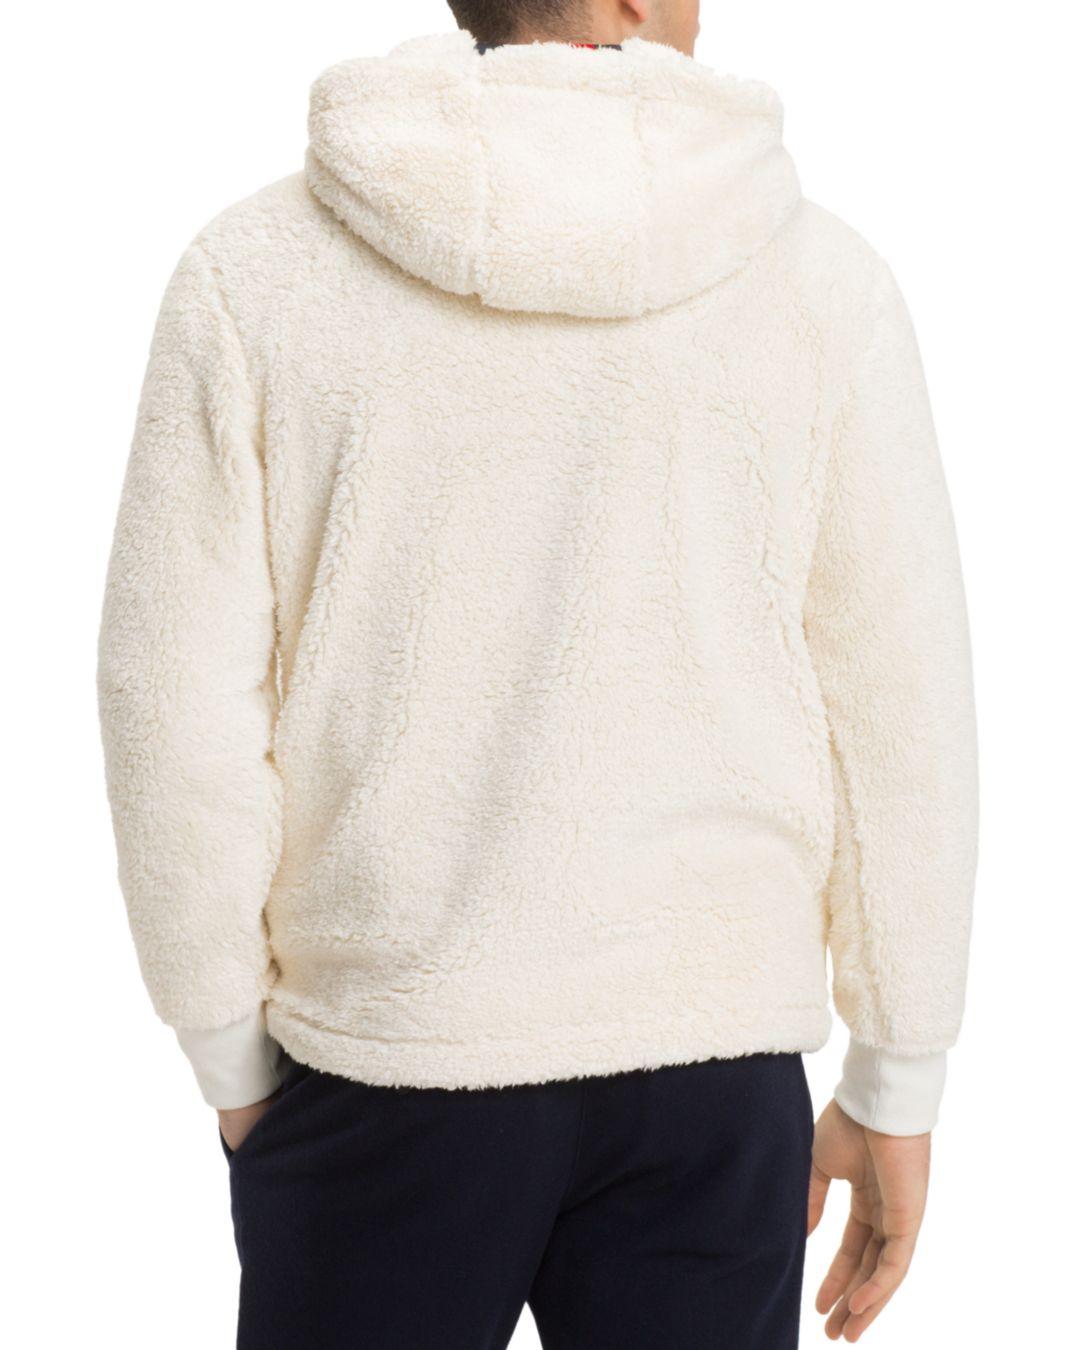 Tommy Hilfiger Oversized Hooded Sherpa Sweatshirt in White for Men - Lyst